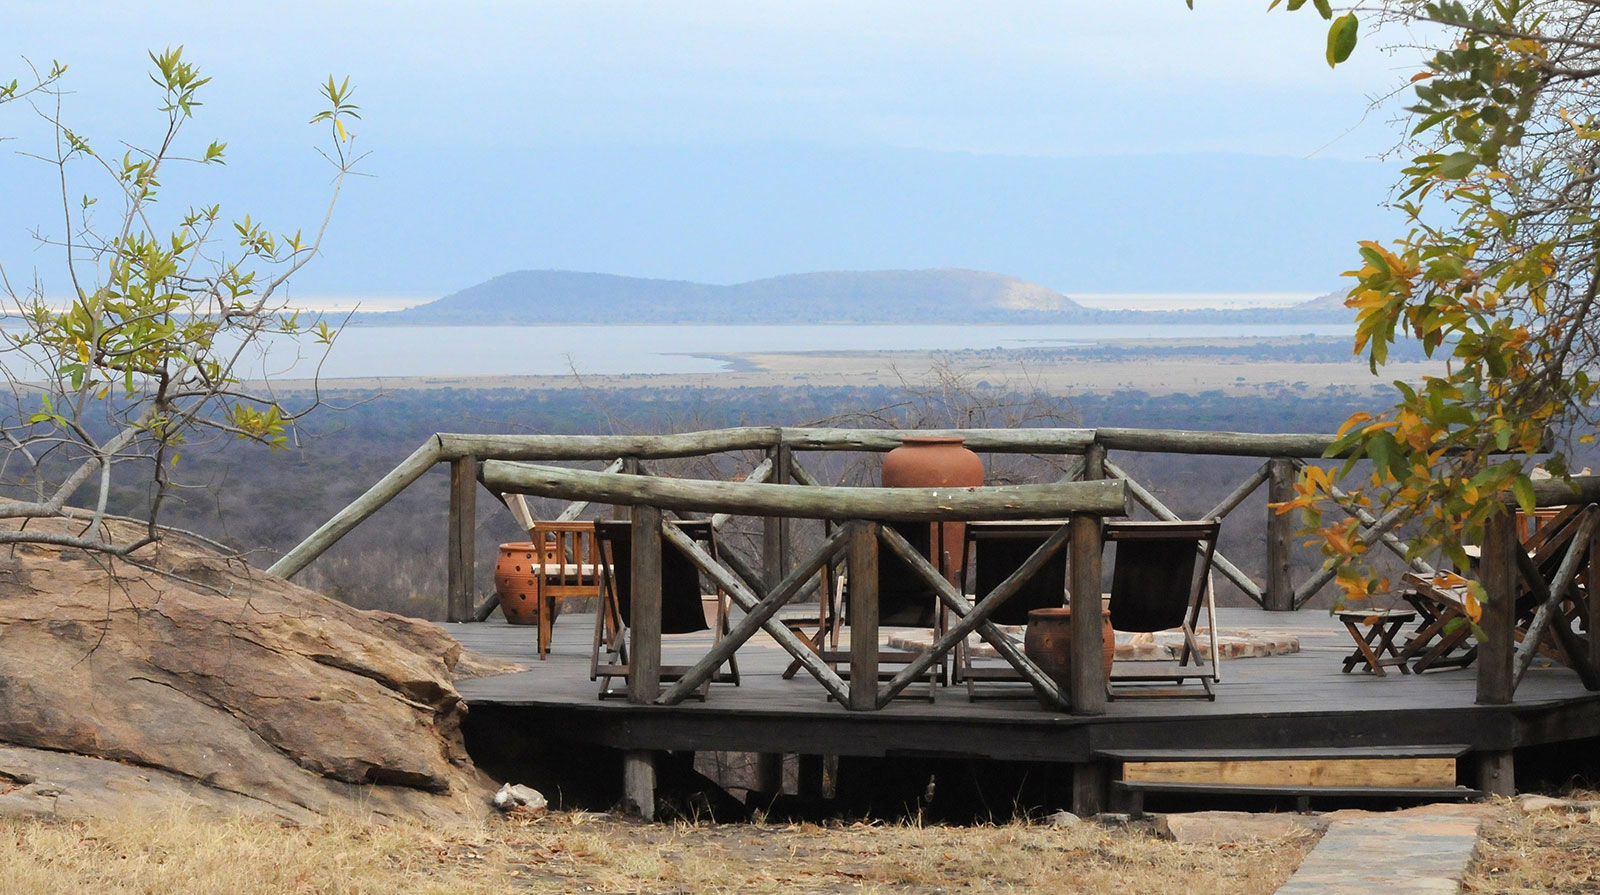 Maweninga Camp - Ein friedlicher Ort
